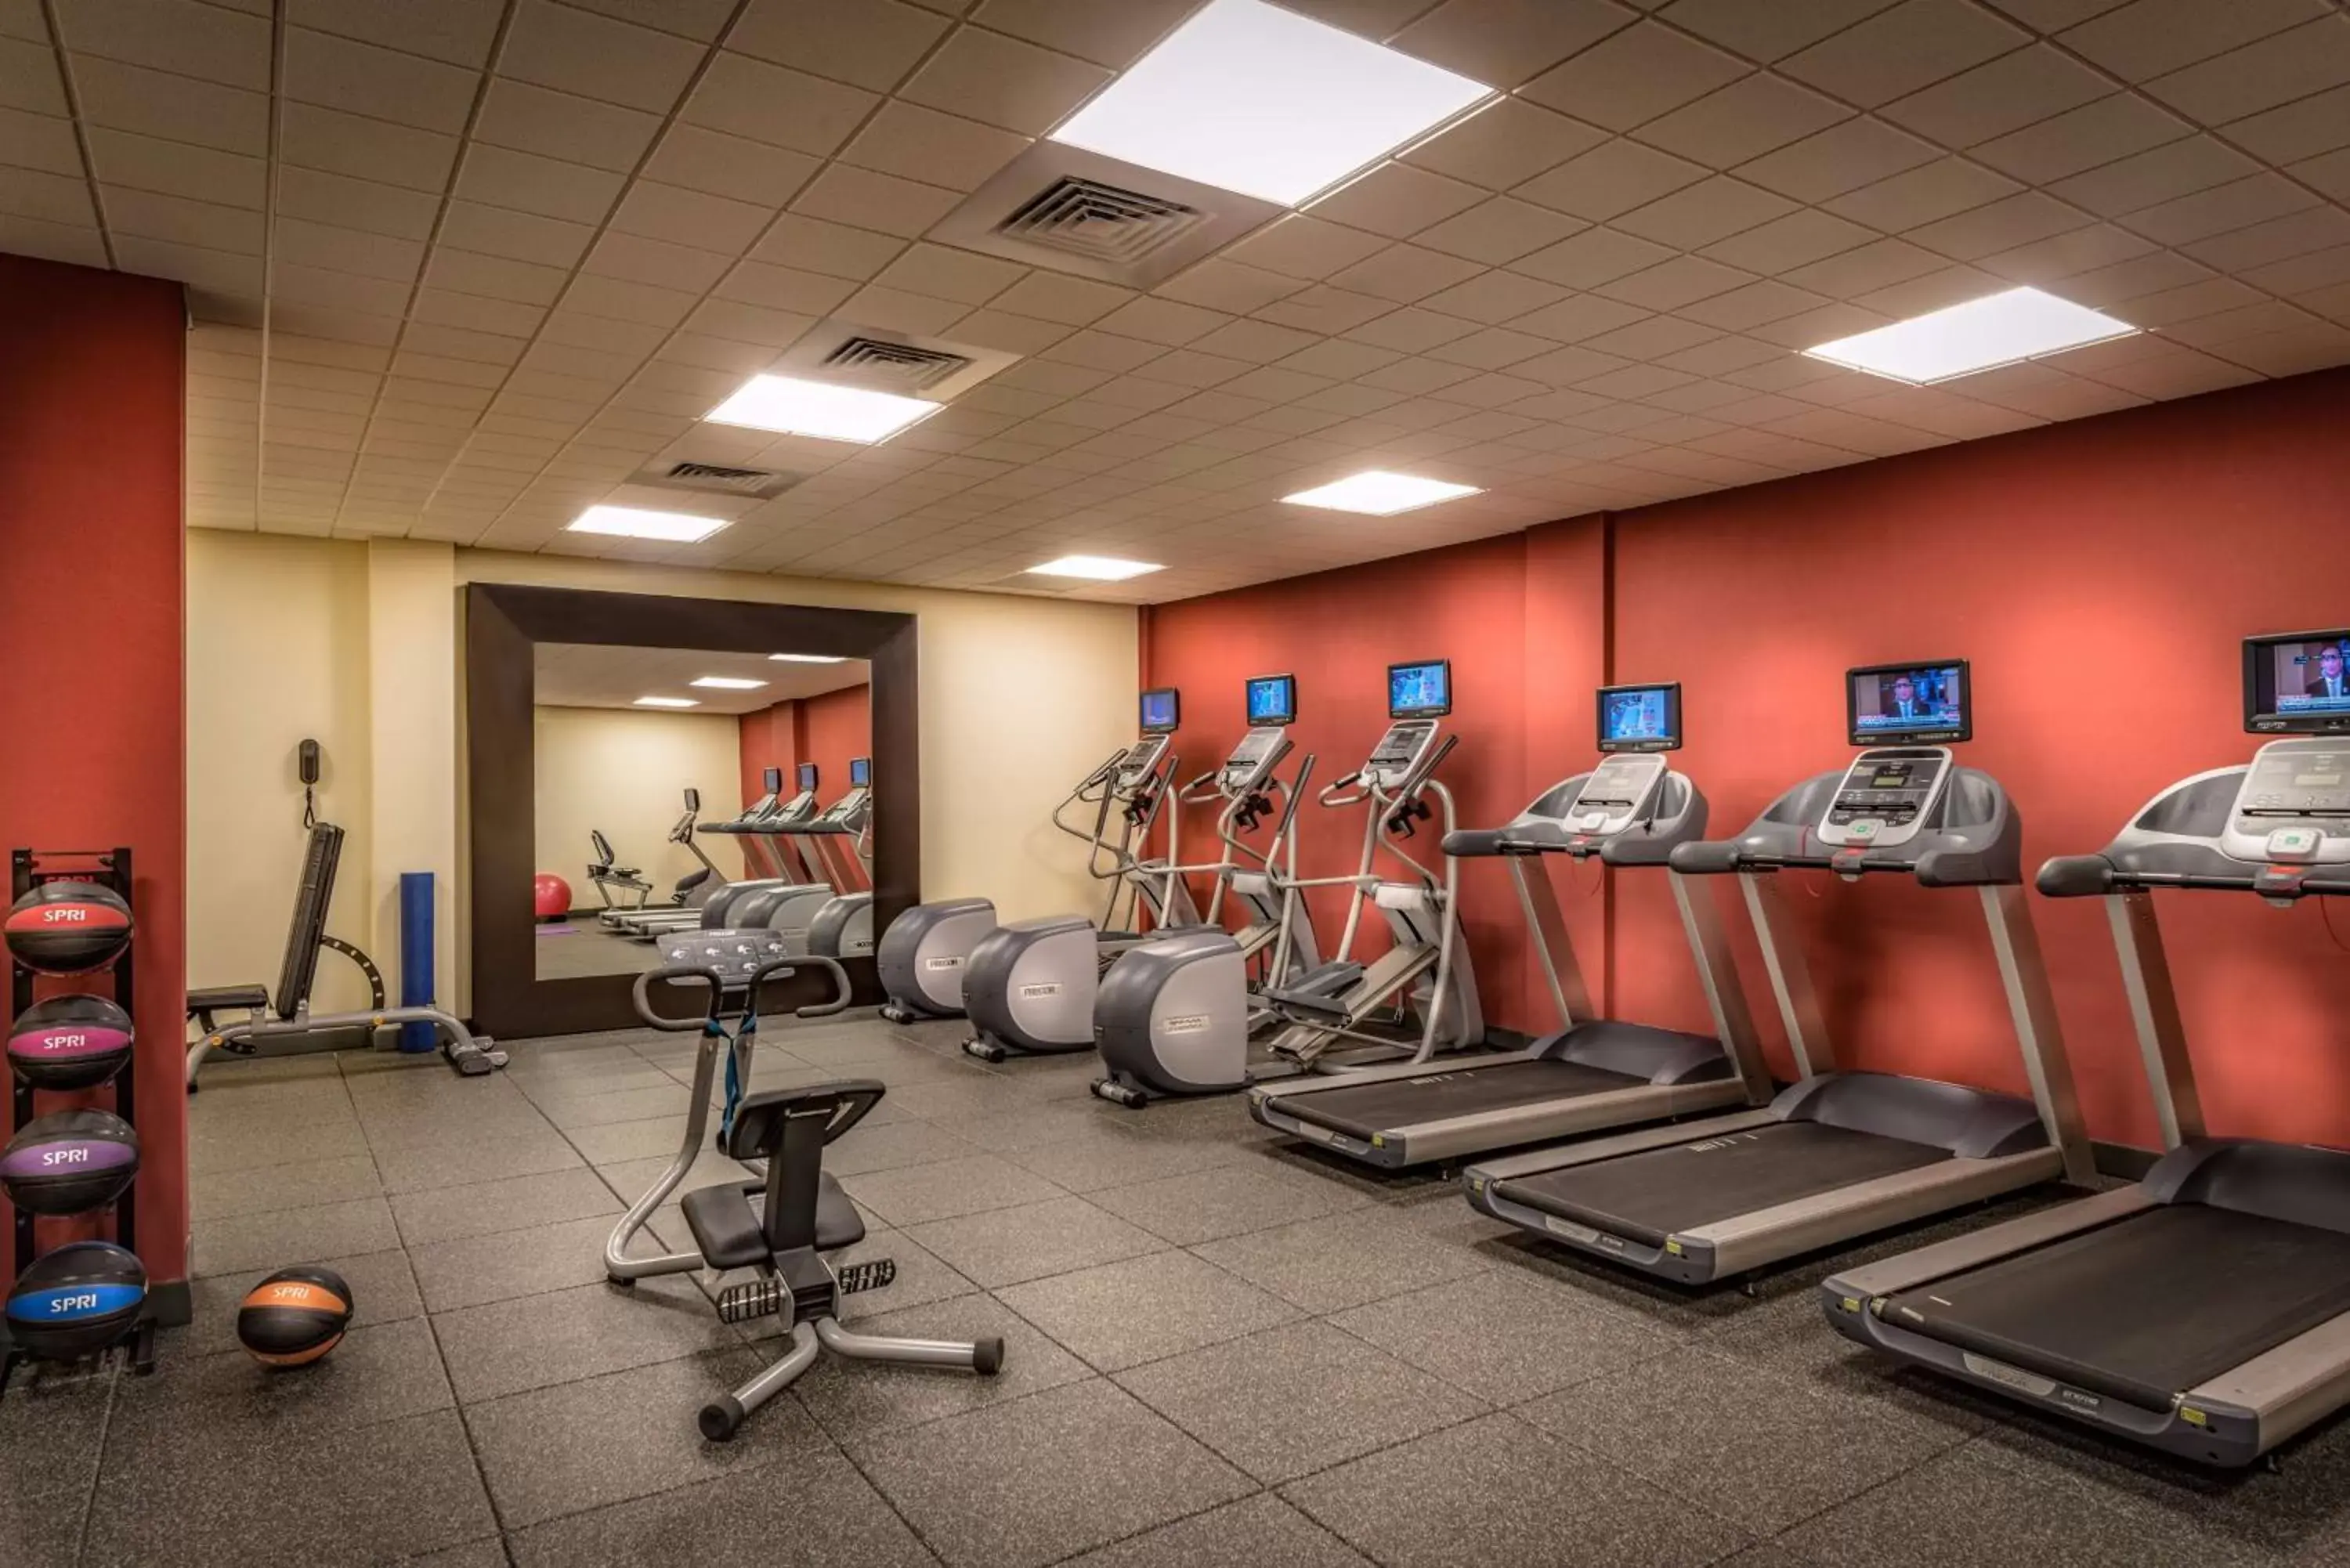 Fitness centre/facilities, Fitness Center/Facilities in Hilton Garden Inn Reagan National Airport